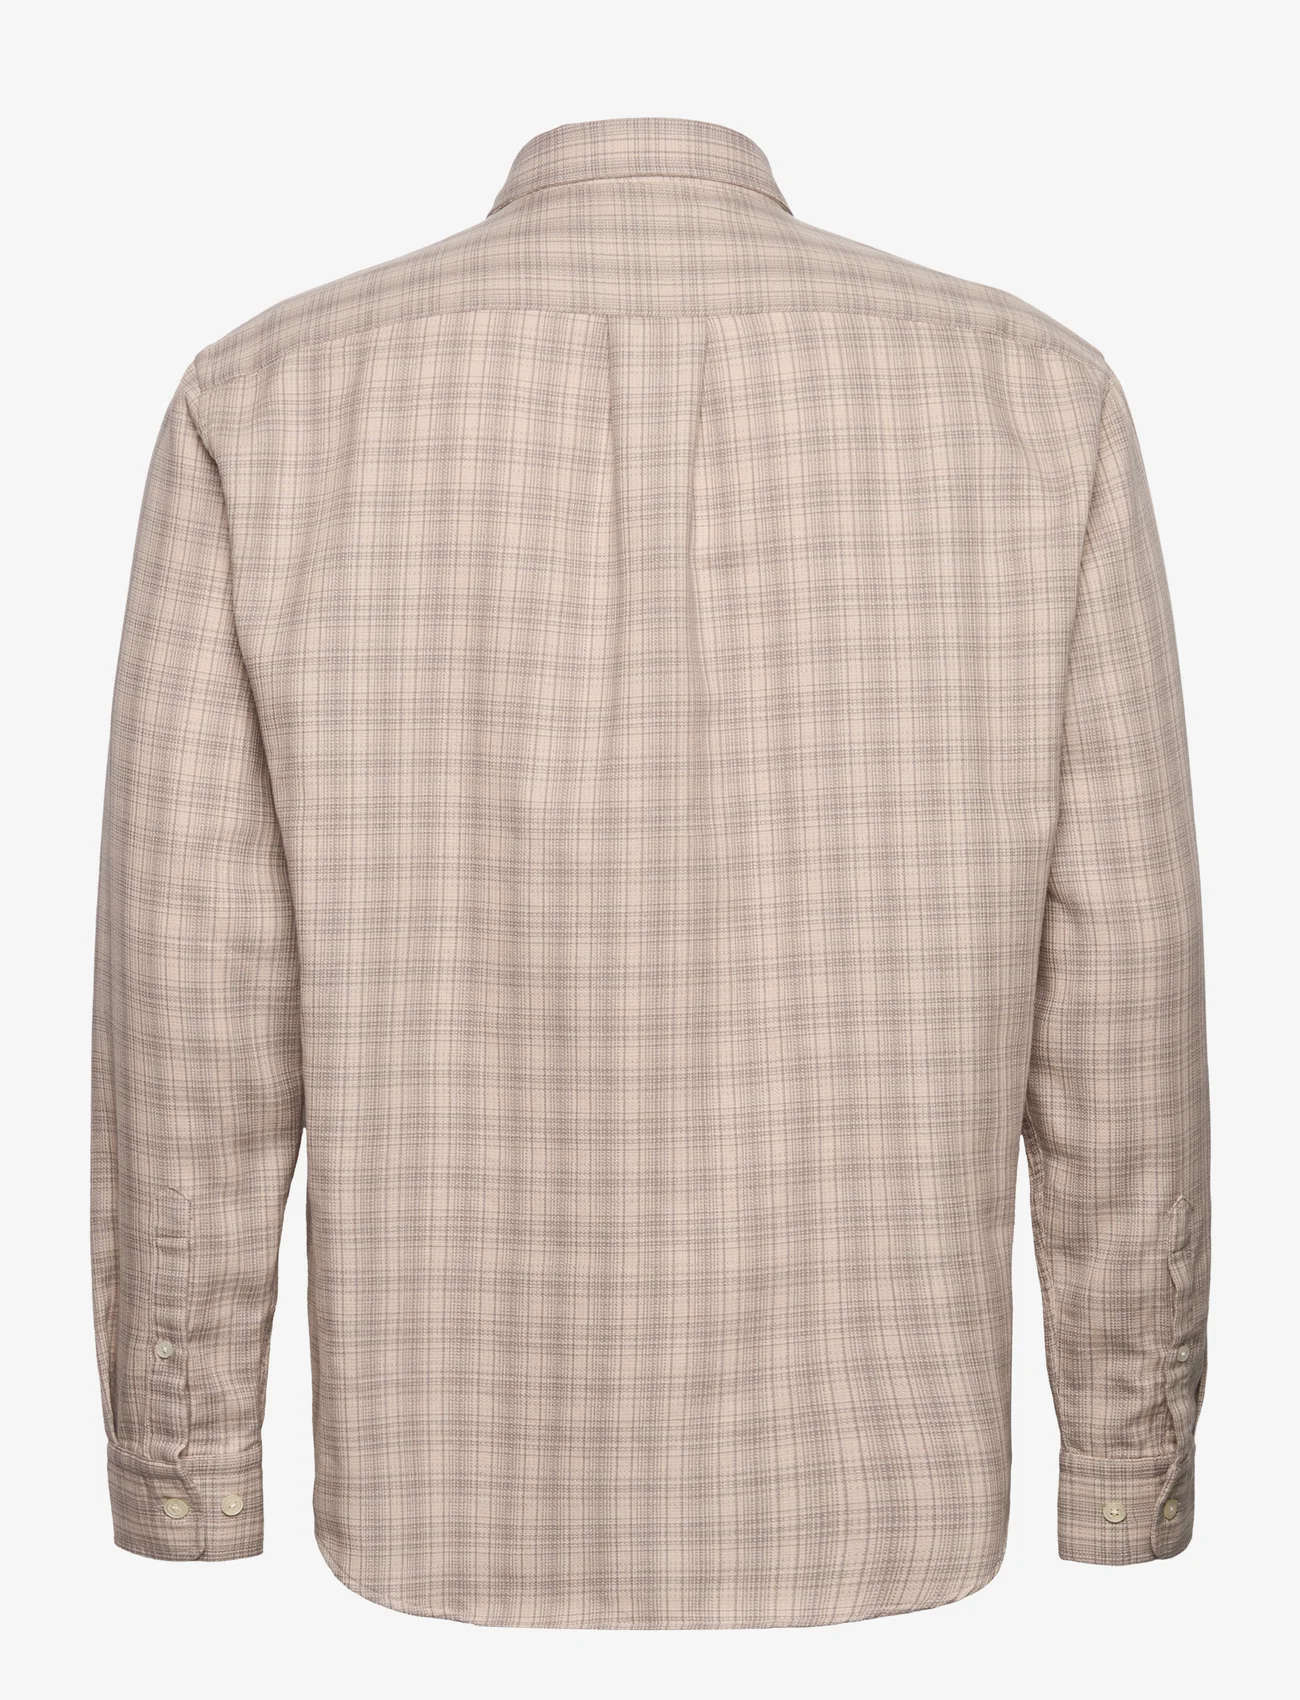 Mads Nørgaard - Summer Cotton Malte Shirt - languoti marškiniai - rainy day/vintage khaki - 1